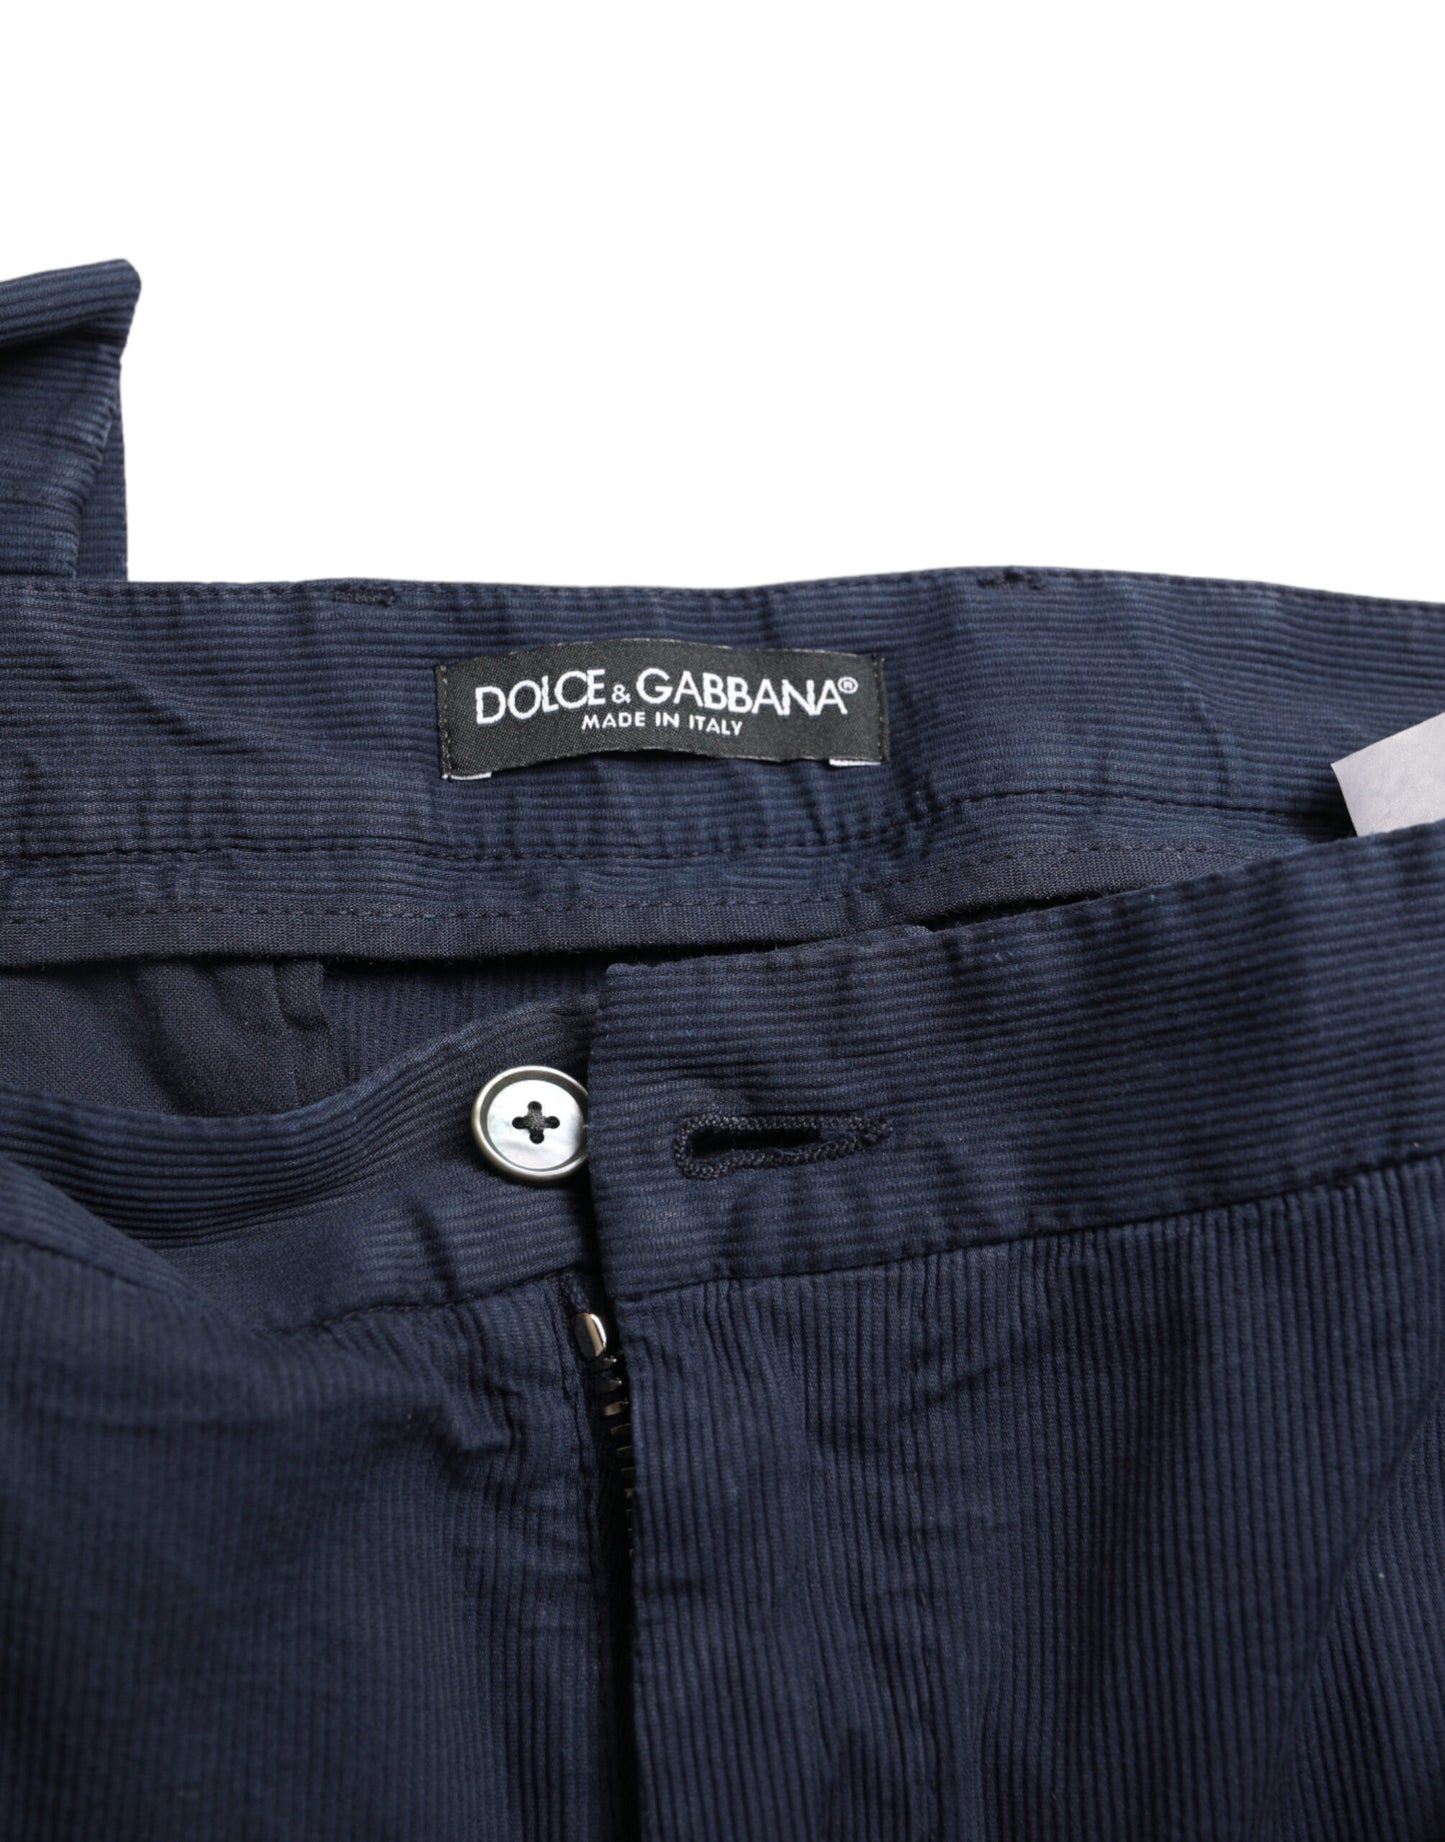 Dolce & Gabbana Elegant Dark Blue Skinny Dress Pants